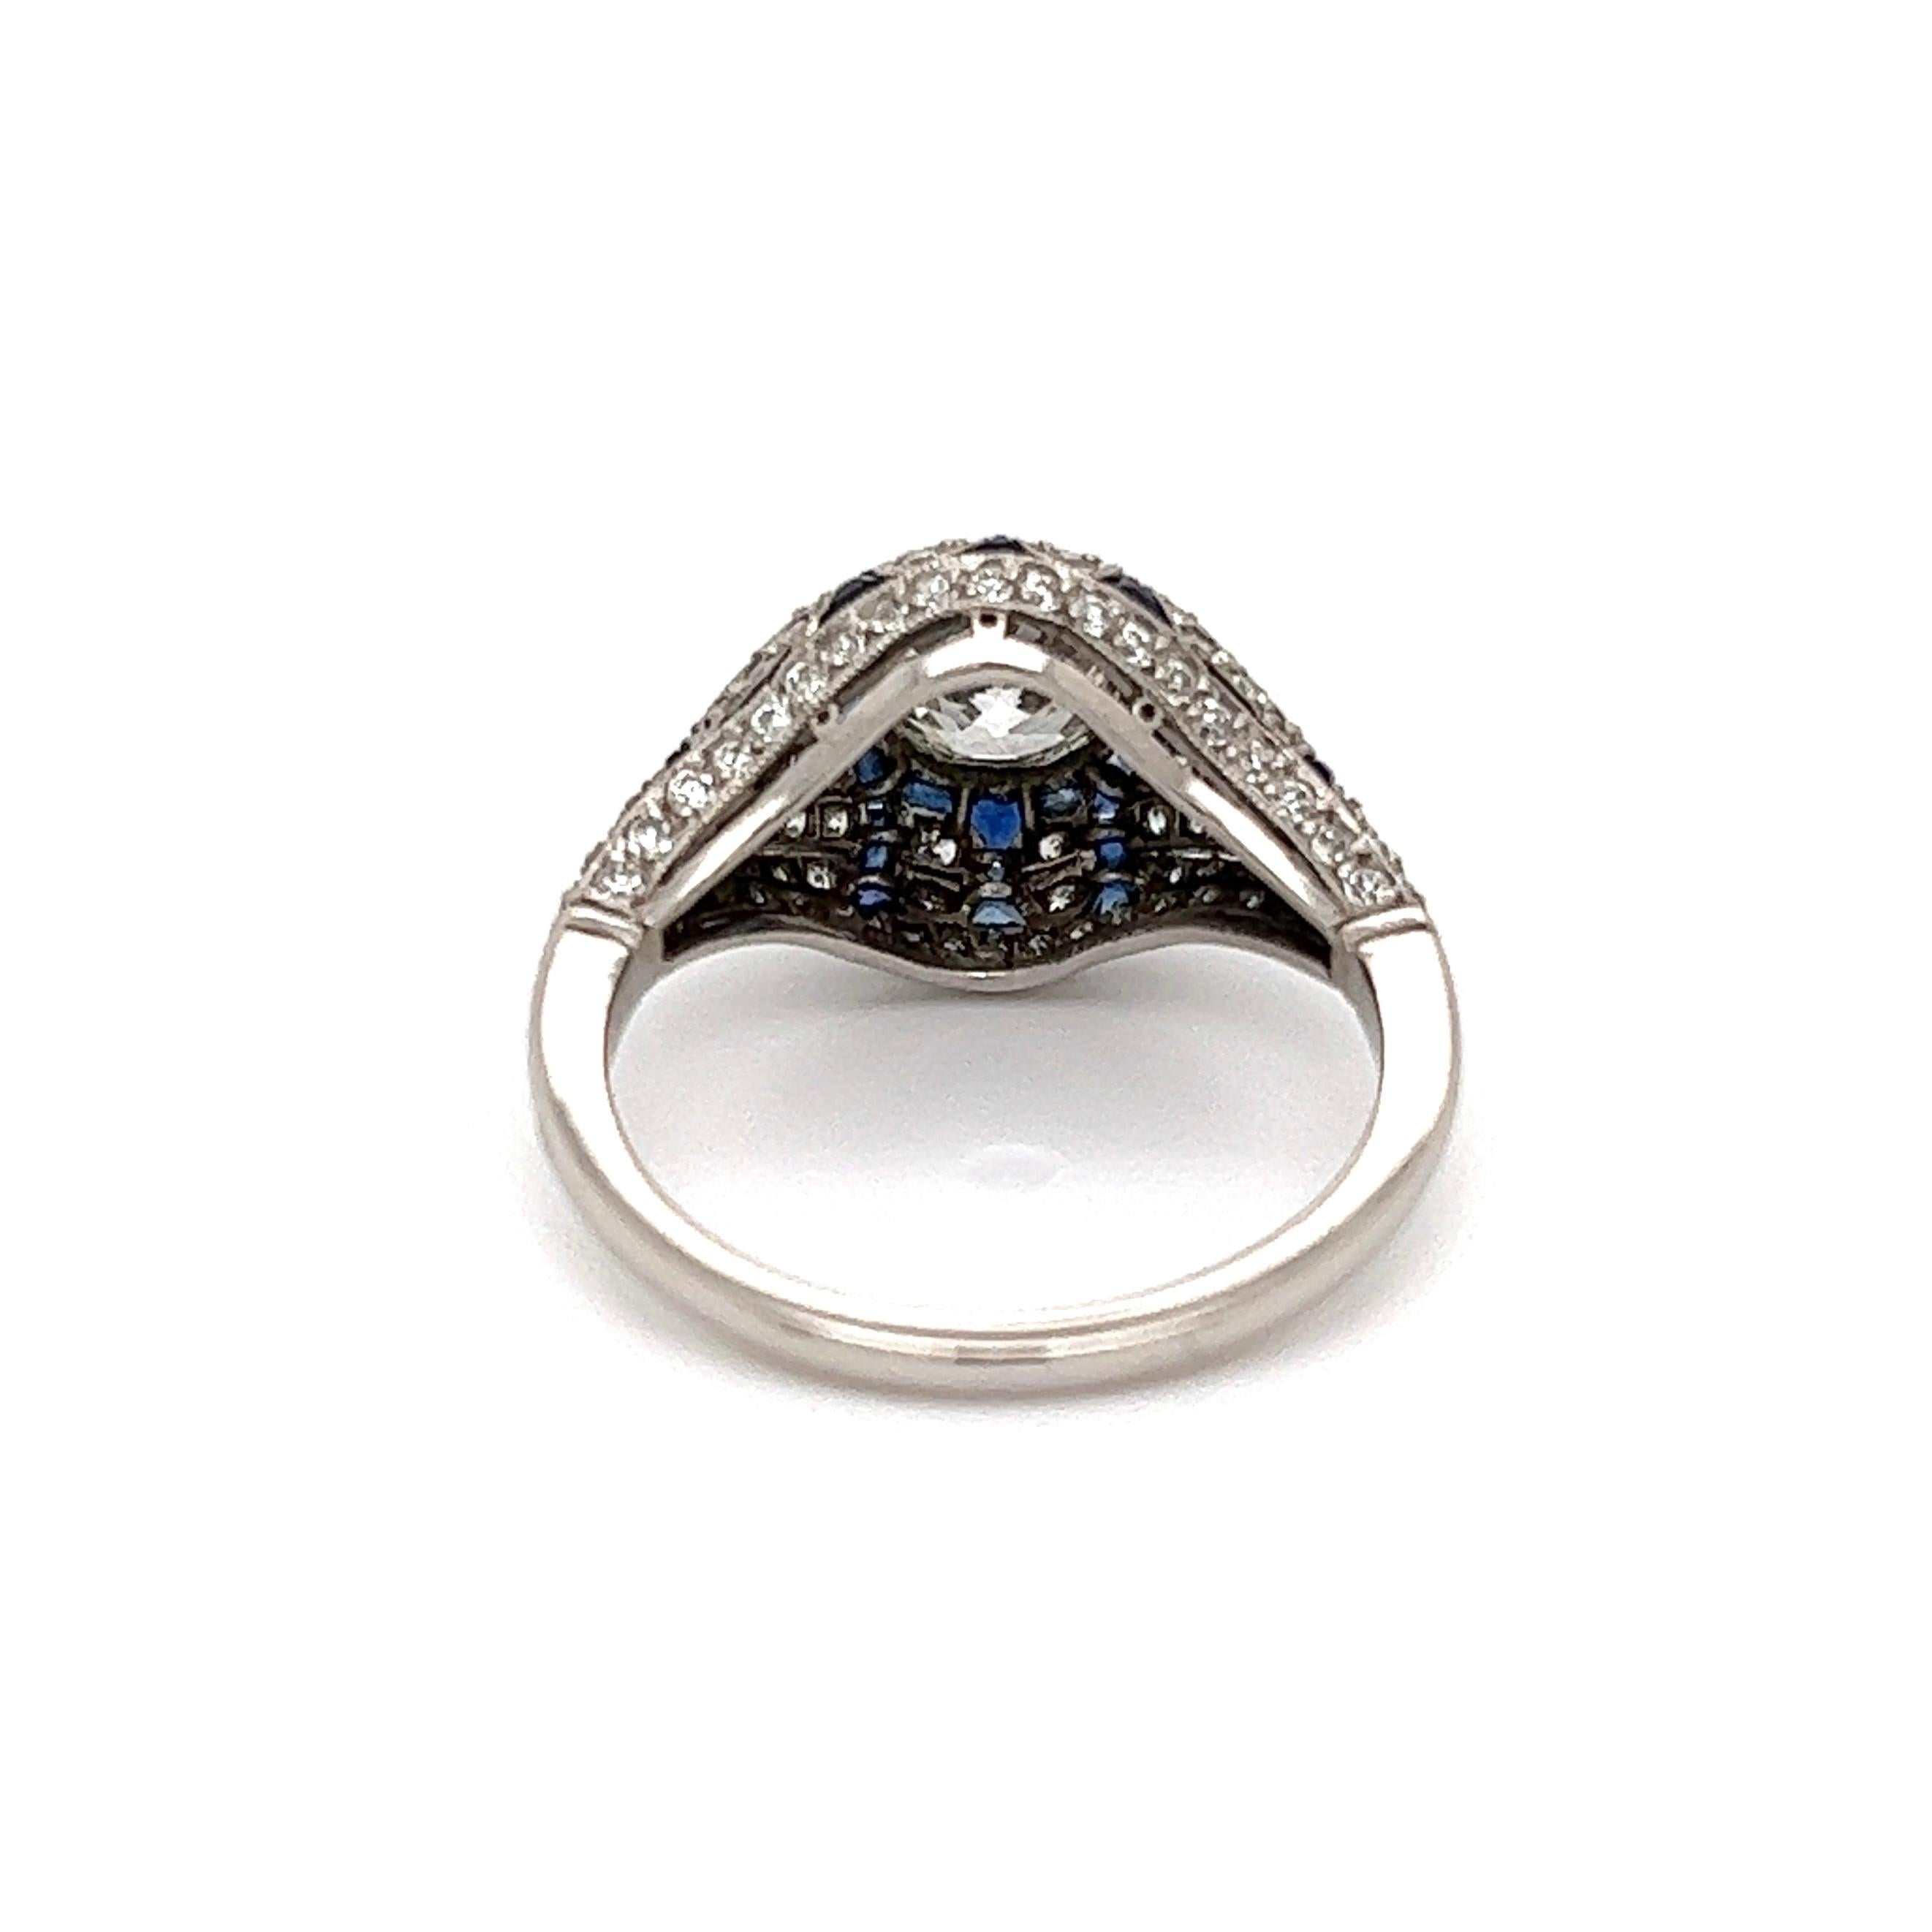 Diamond and Sapphire Art Deco Revival Platinum Ring Fine Estate Jewelry 1